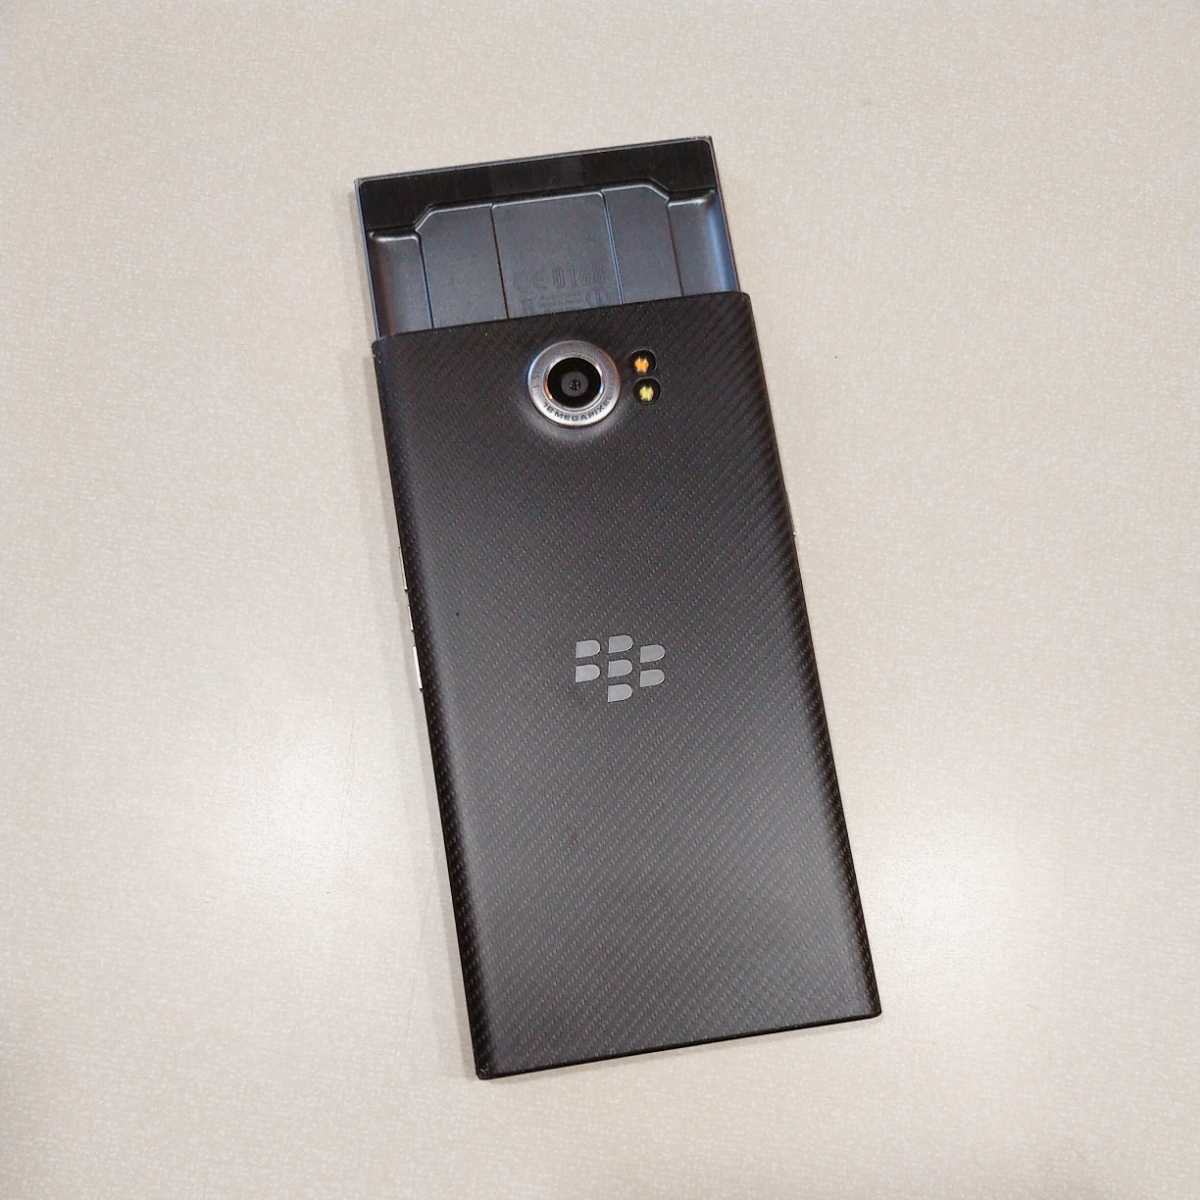 kps 送料無料 国内正規品 SIMフリー スマートフォン ブラックベリー PRIV FOX STL-100-3 BlackBerry_画像5